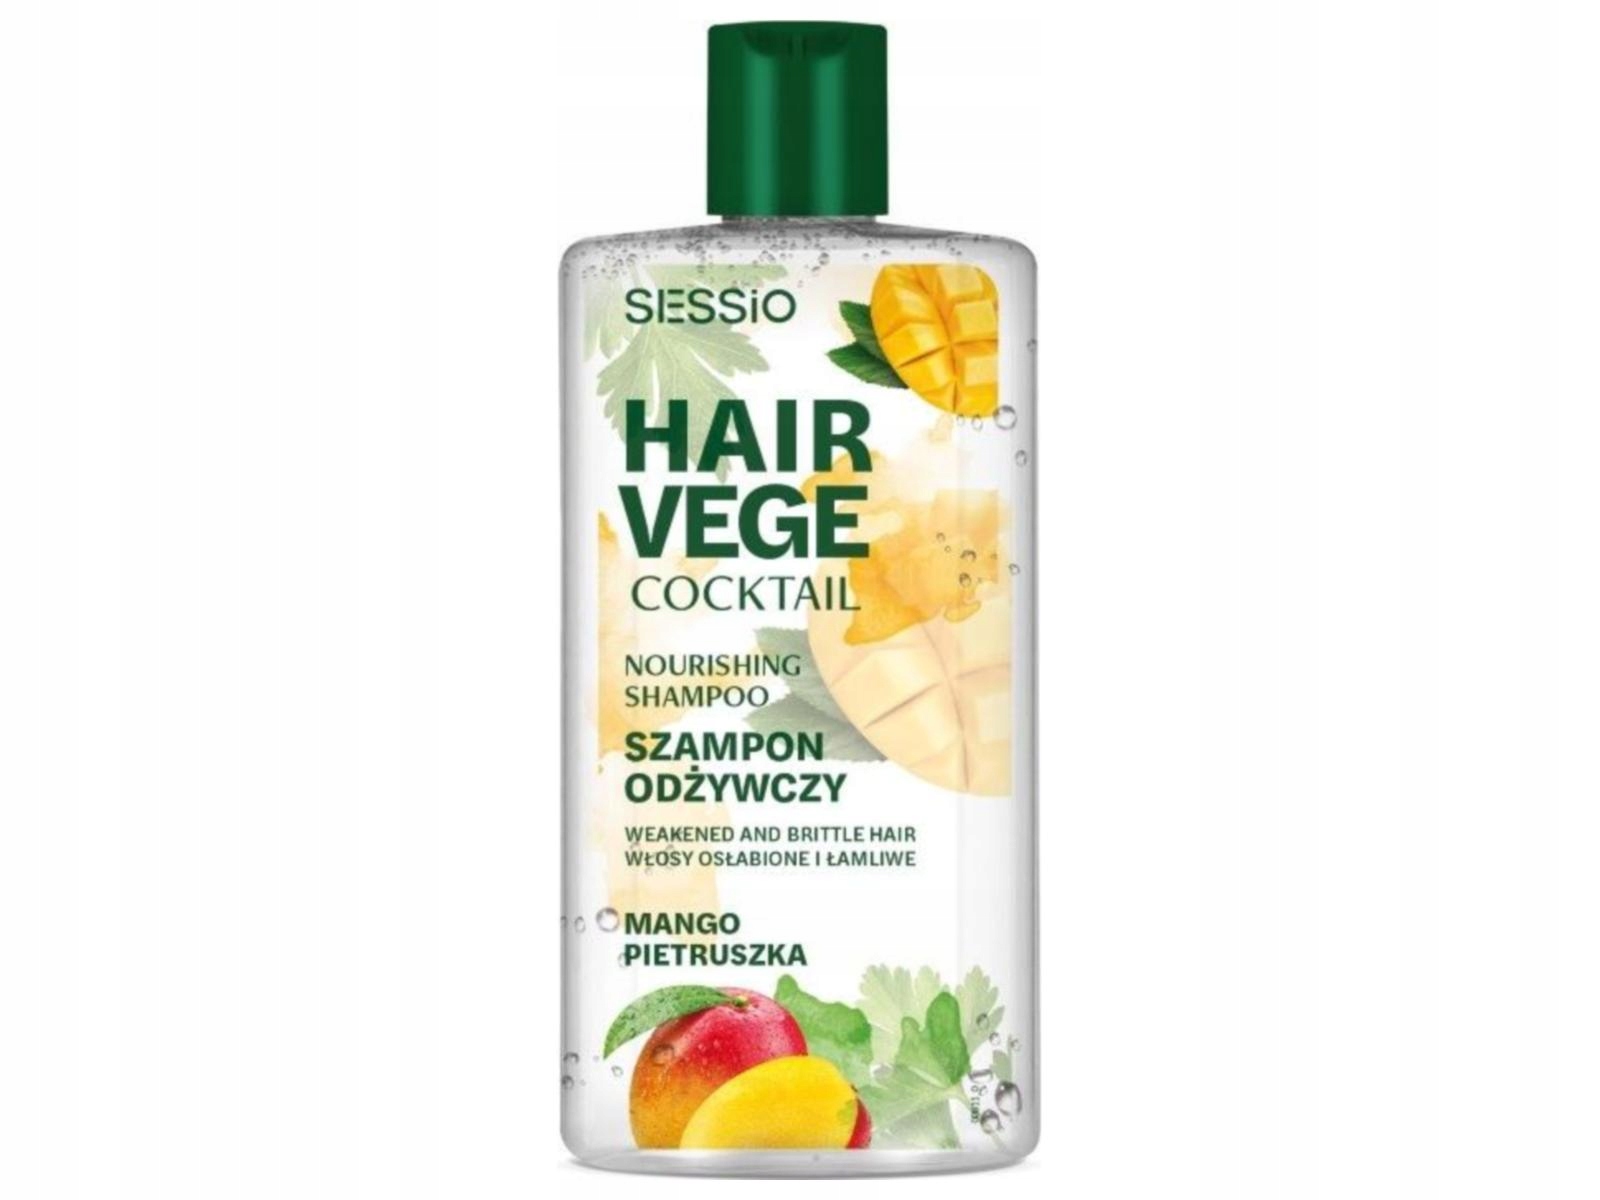 sessio hair vege delikatny szampon